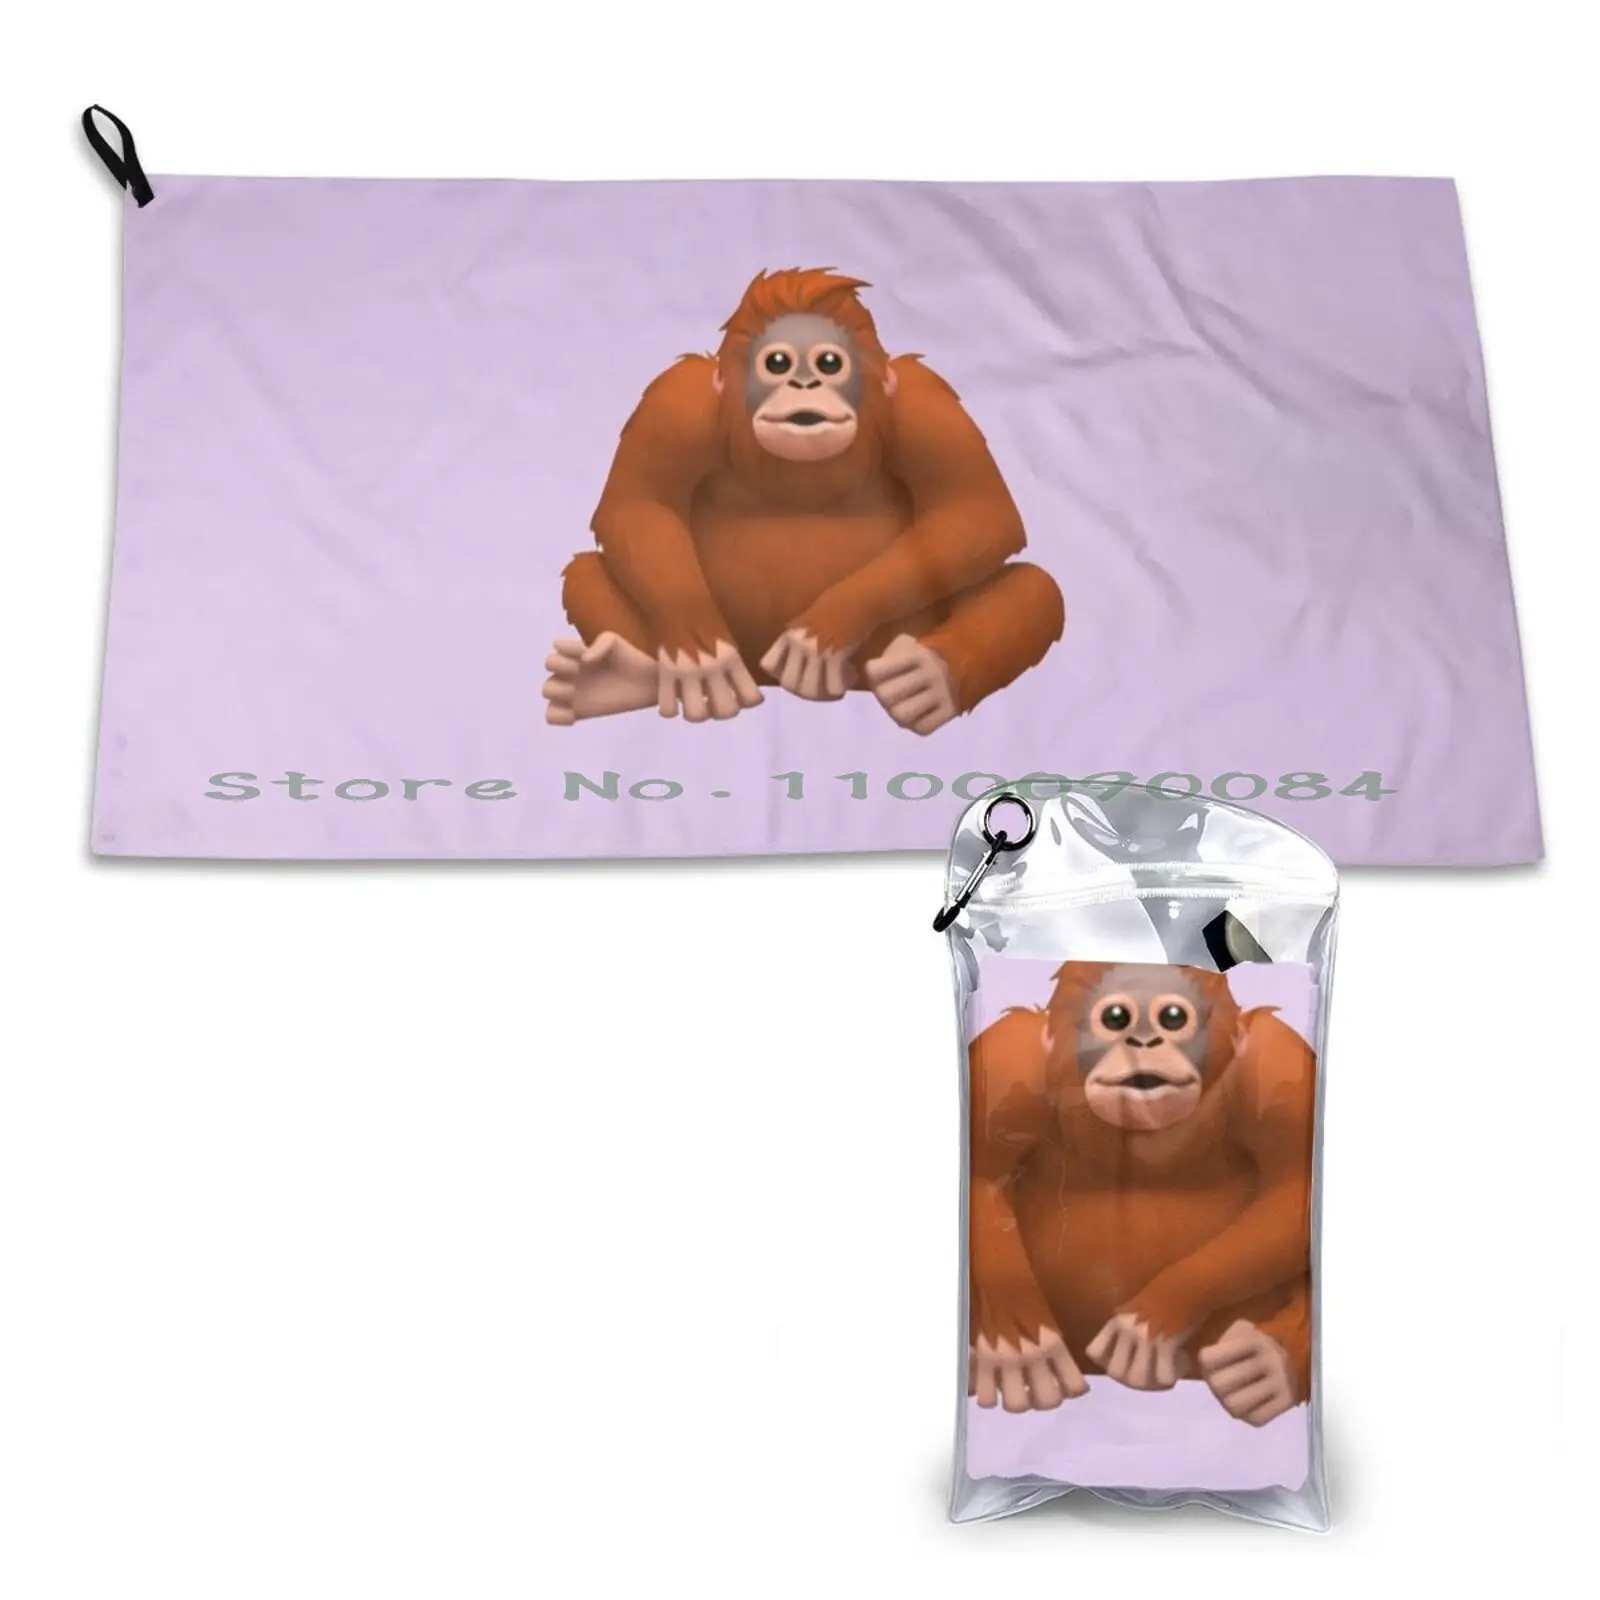 Orangutan Quick Dry Towel Gym Sports Bath Portable Orangutan Ape Monkey Primate Funny Cute Memes Uh Oh Stinky Le Monke Animals